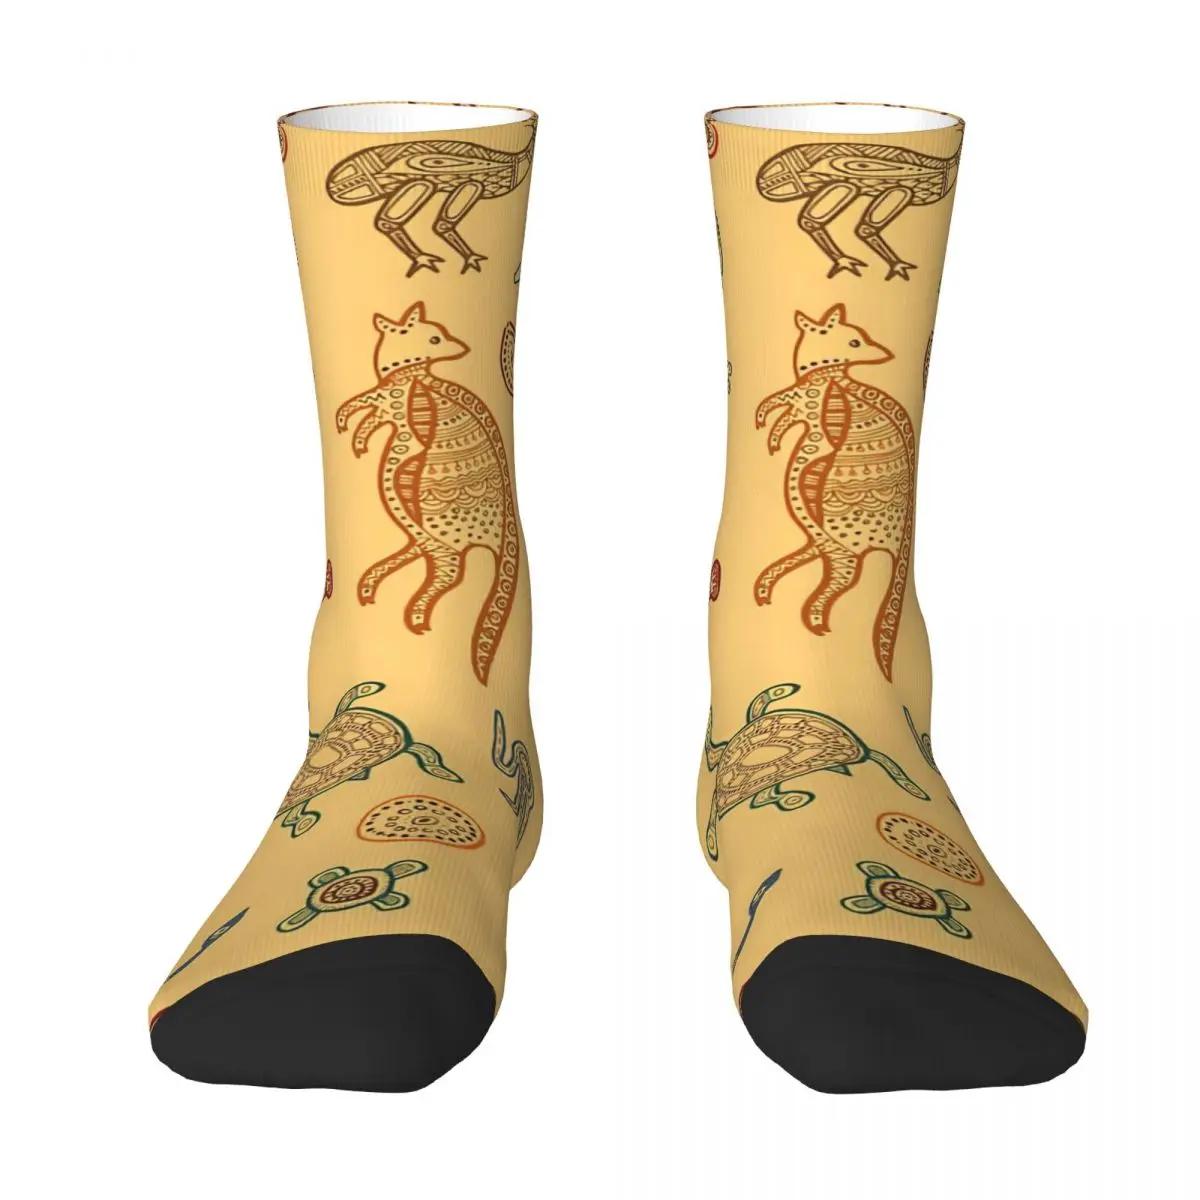 Aboriginal Australian Animals To The Ethnicity Adult Socks Unisex socks,men Socks women Socks